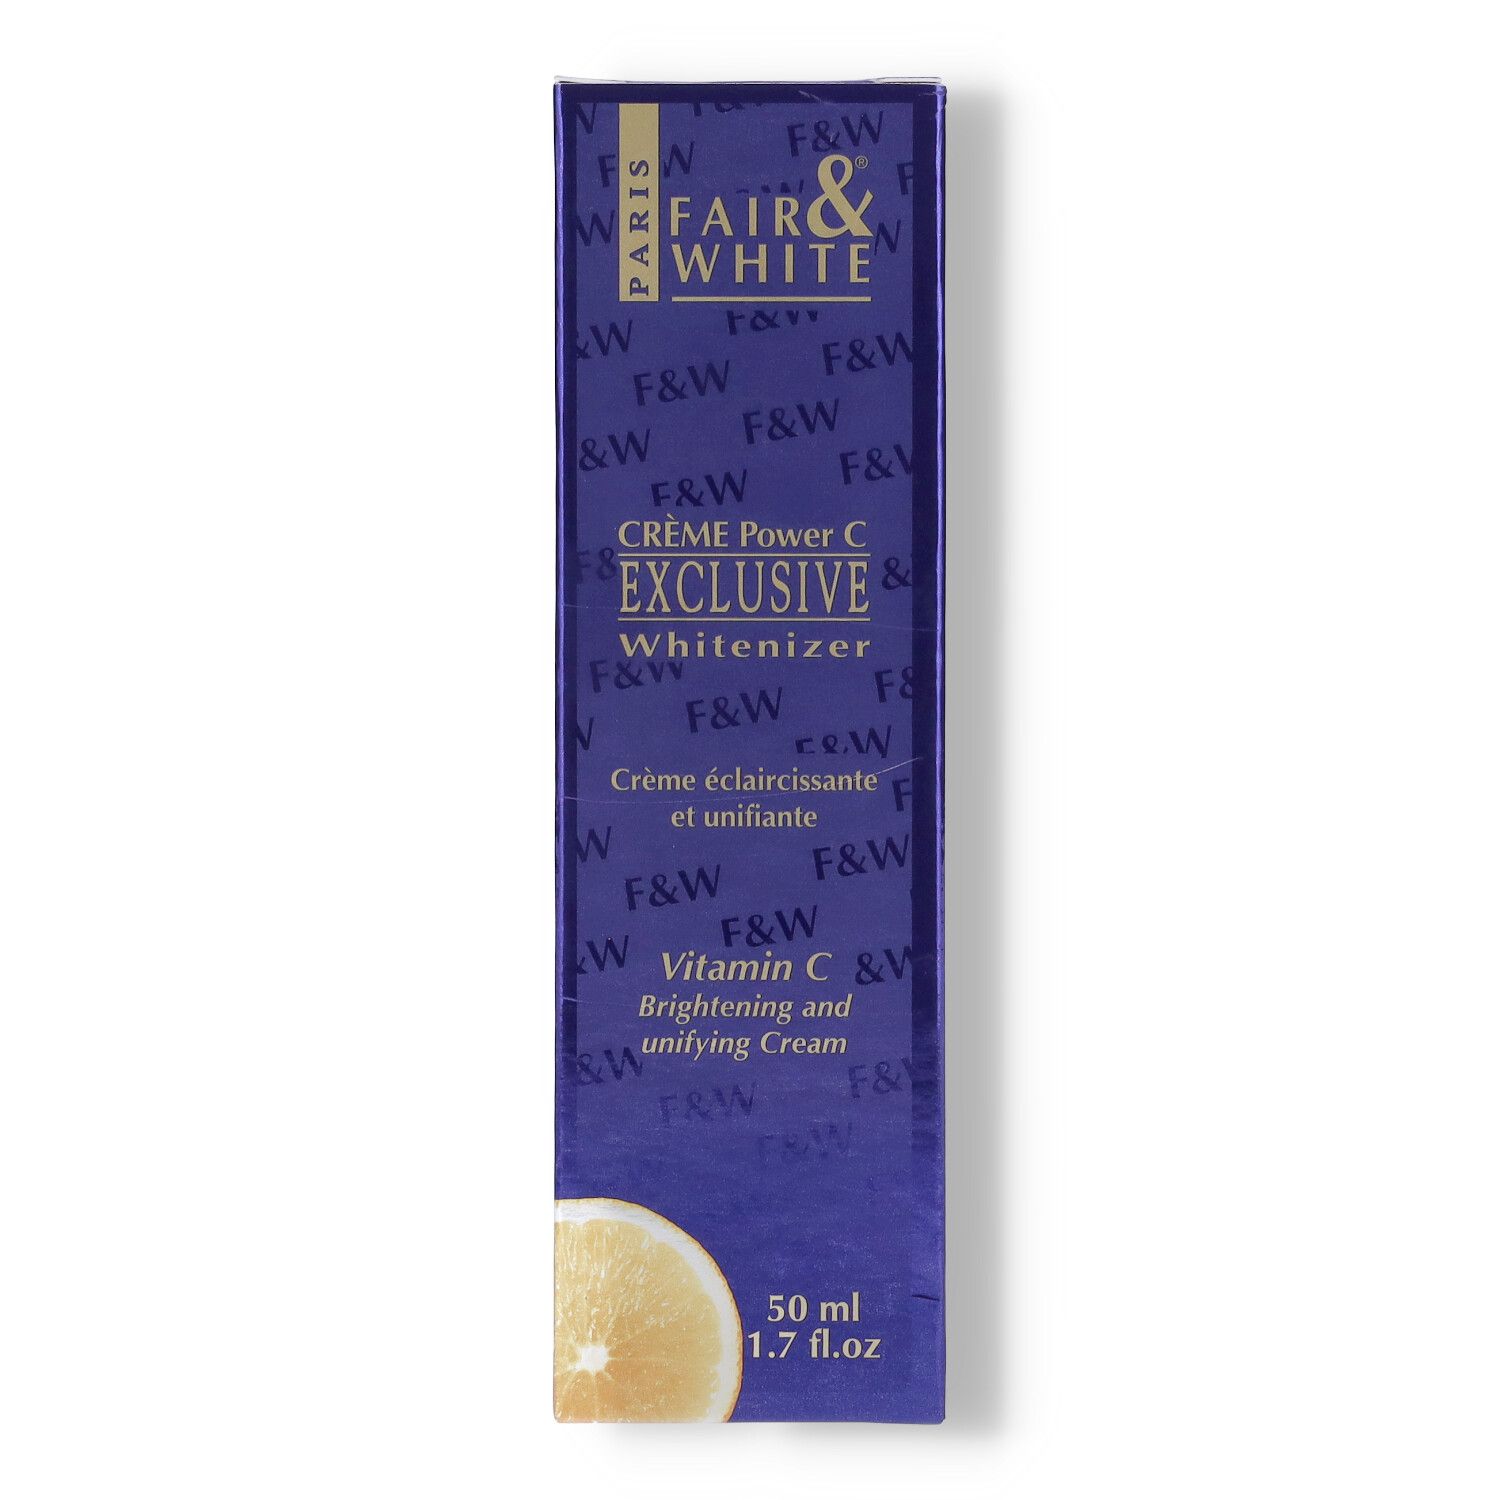 Fair & White Exclusive Whitenizer Brightening Cream With Vitamin C - 50ml